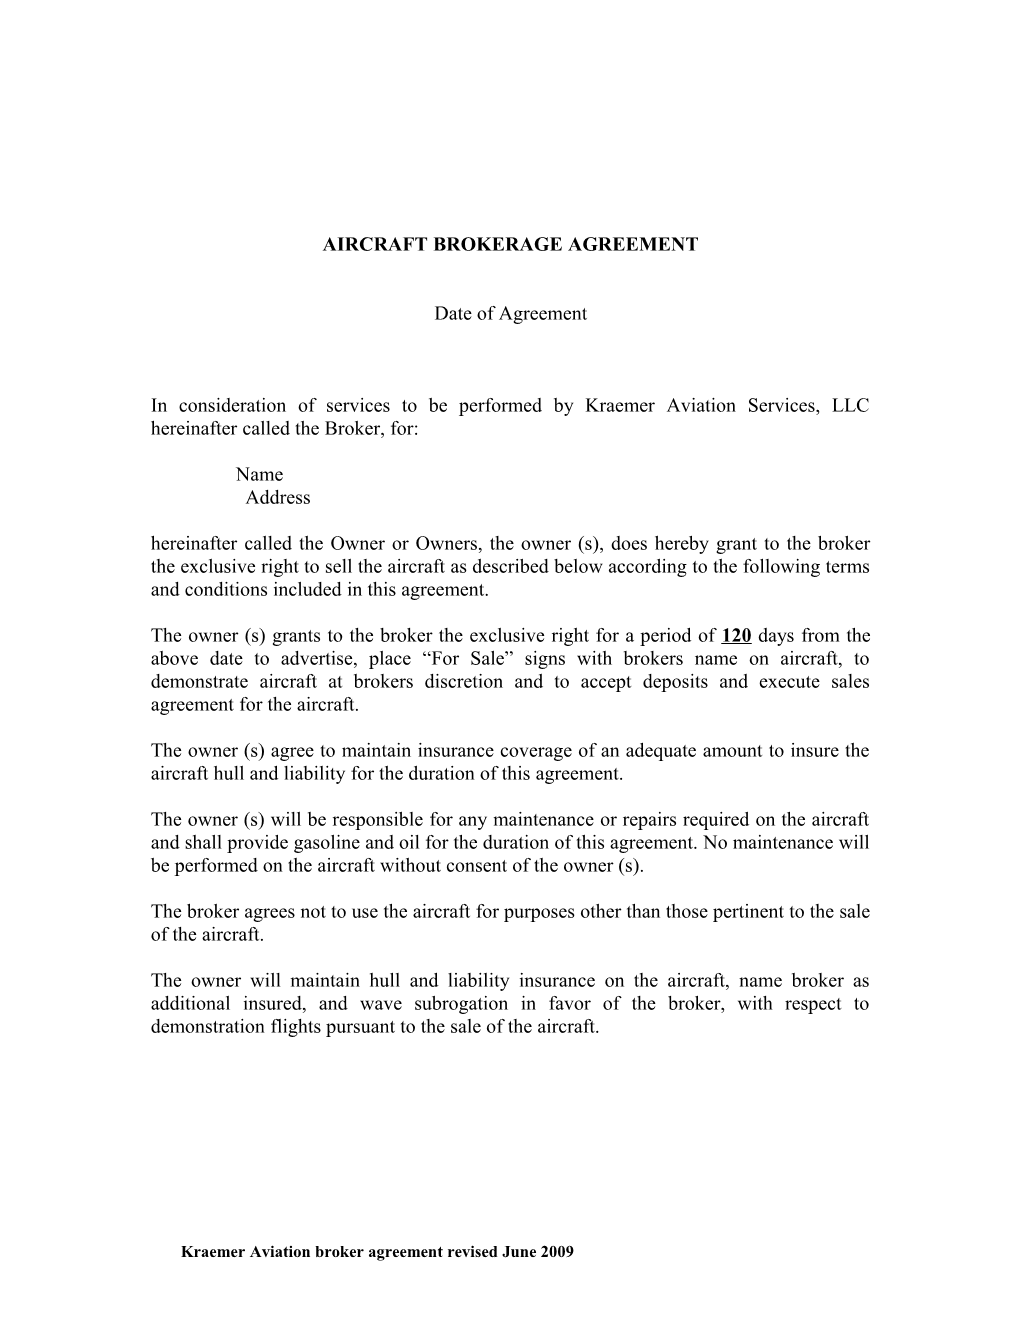 Aircraft Brokerage Agreement